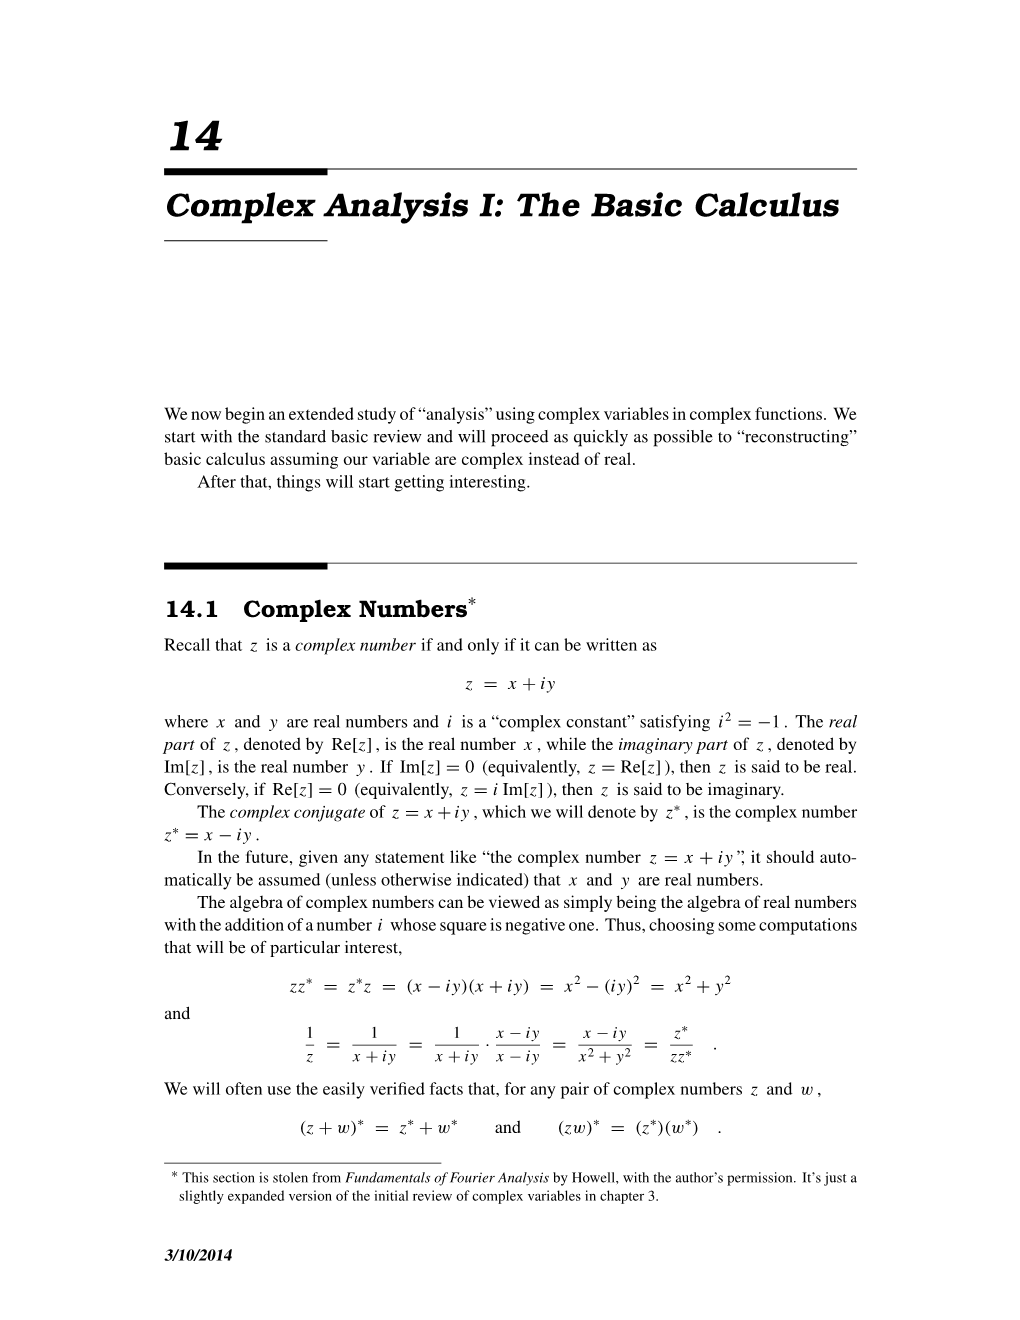 The Basic Calculus